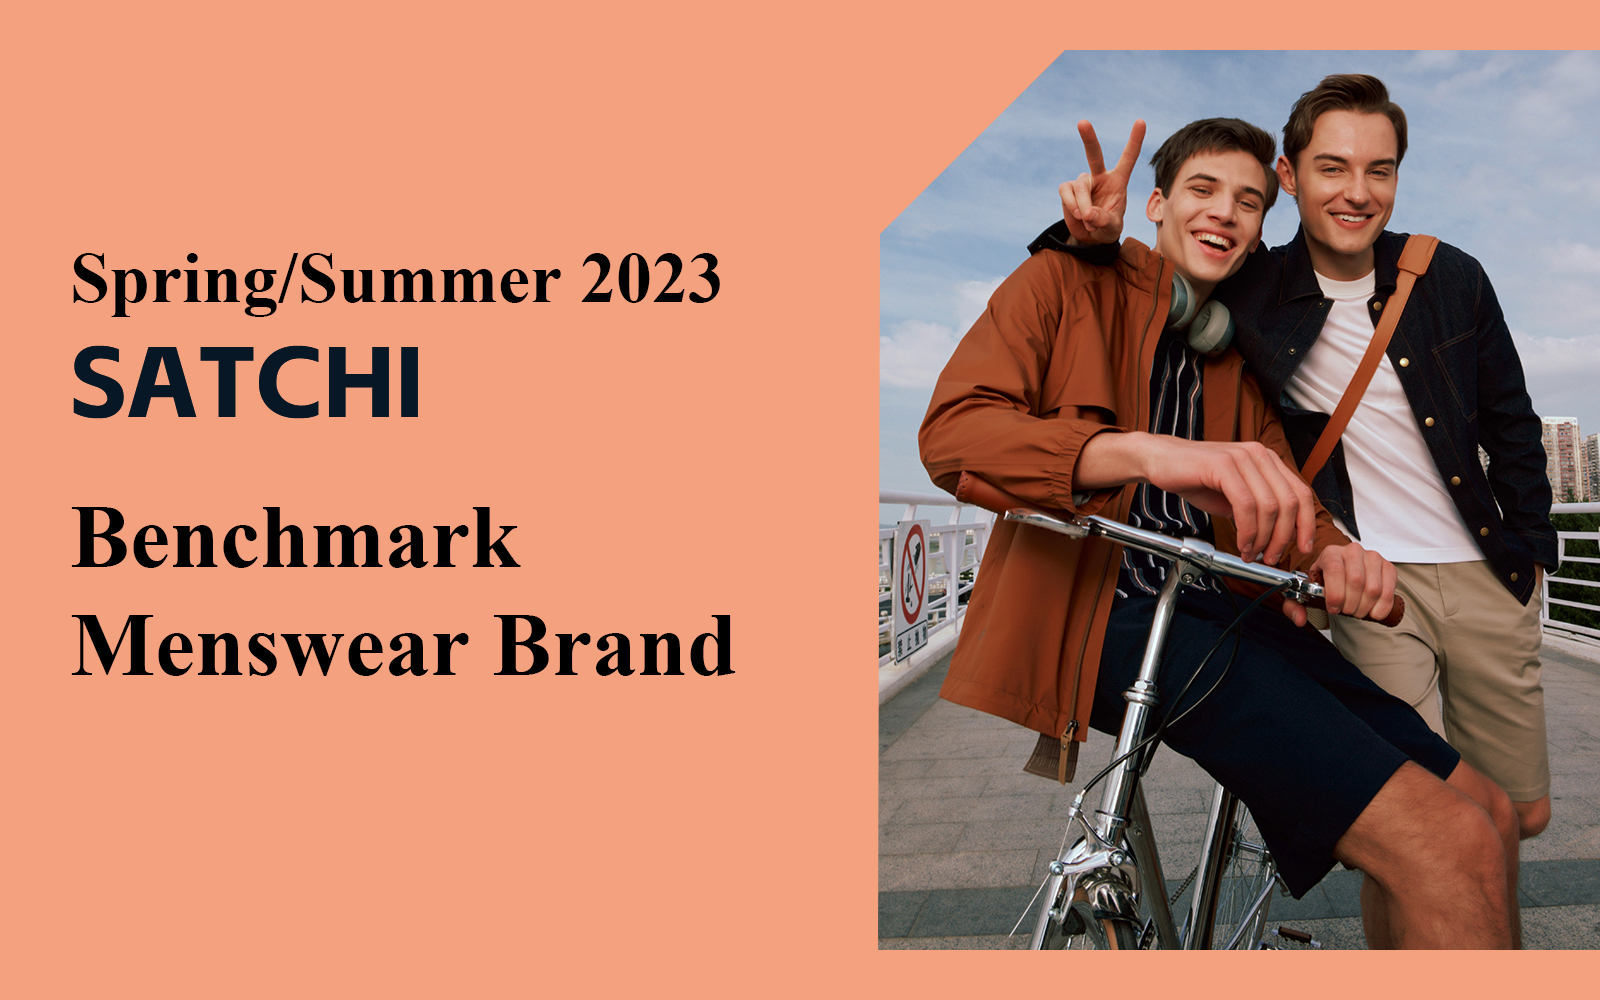 Urban Riding -- The Analysis of Satchi The Benchmark Menswear Brand